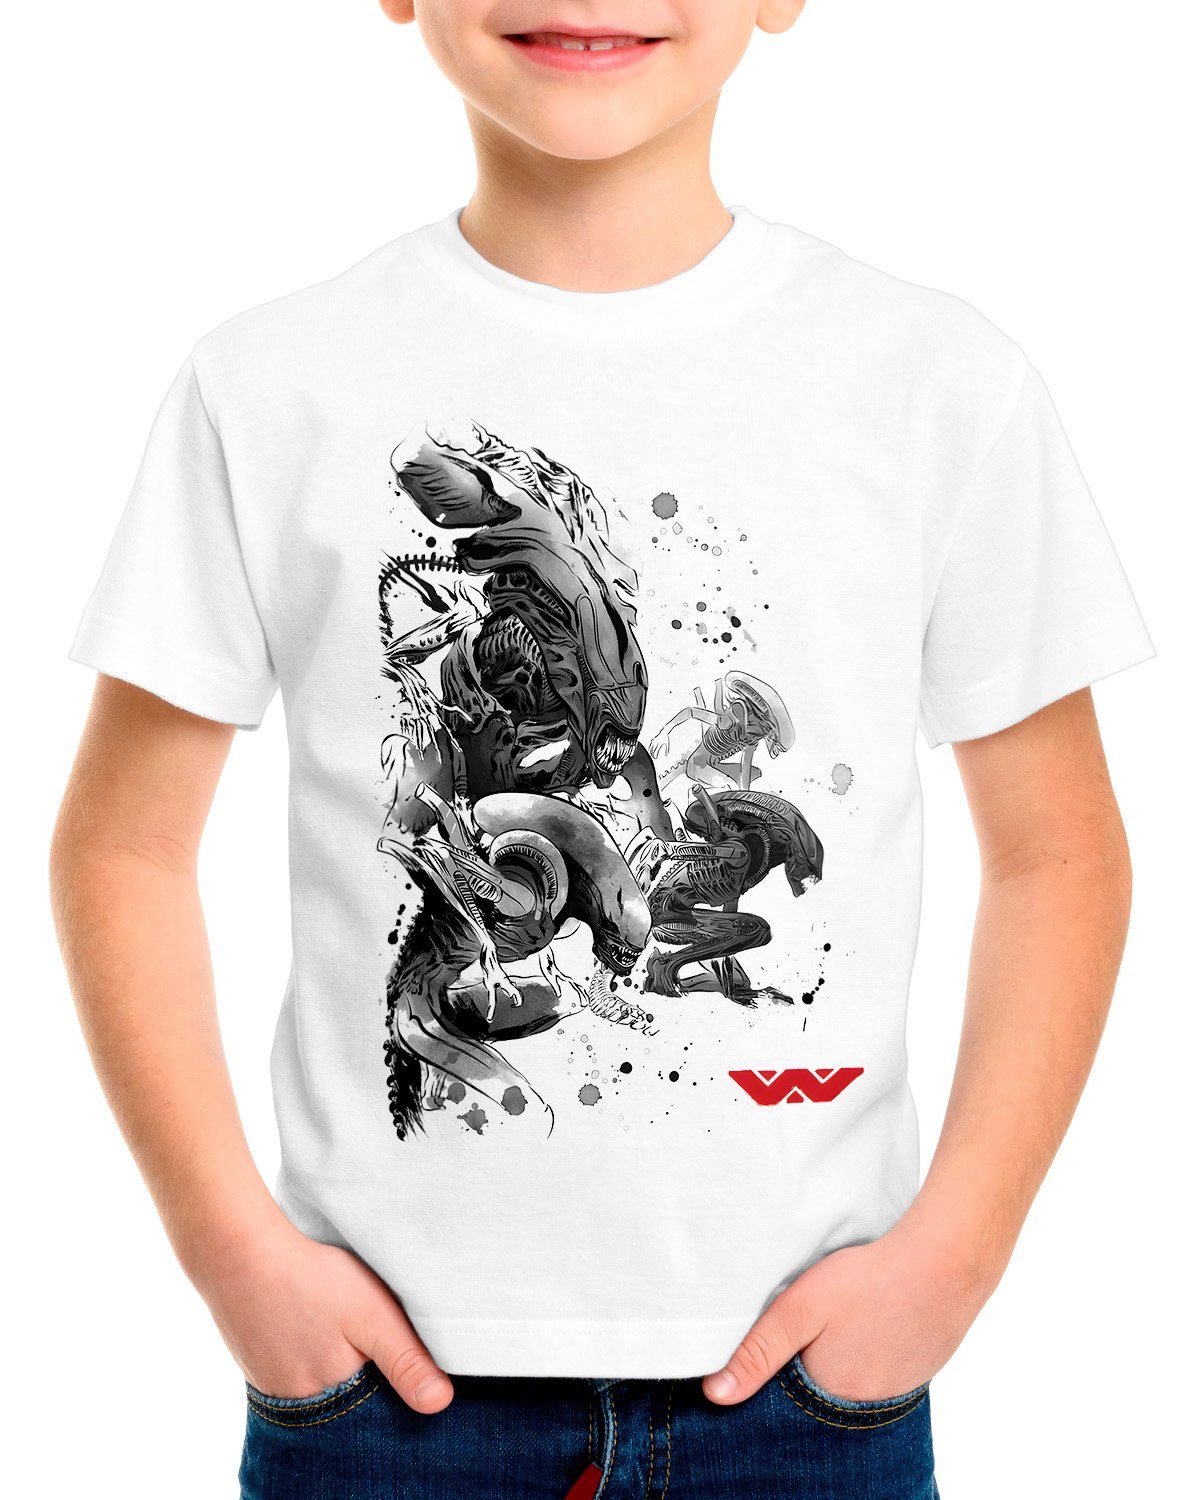 ridley T-Shirt Alien alien Kinder scott Print-Shirt xenomorph predator style3 Invasion